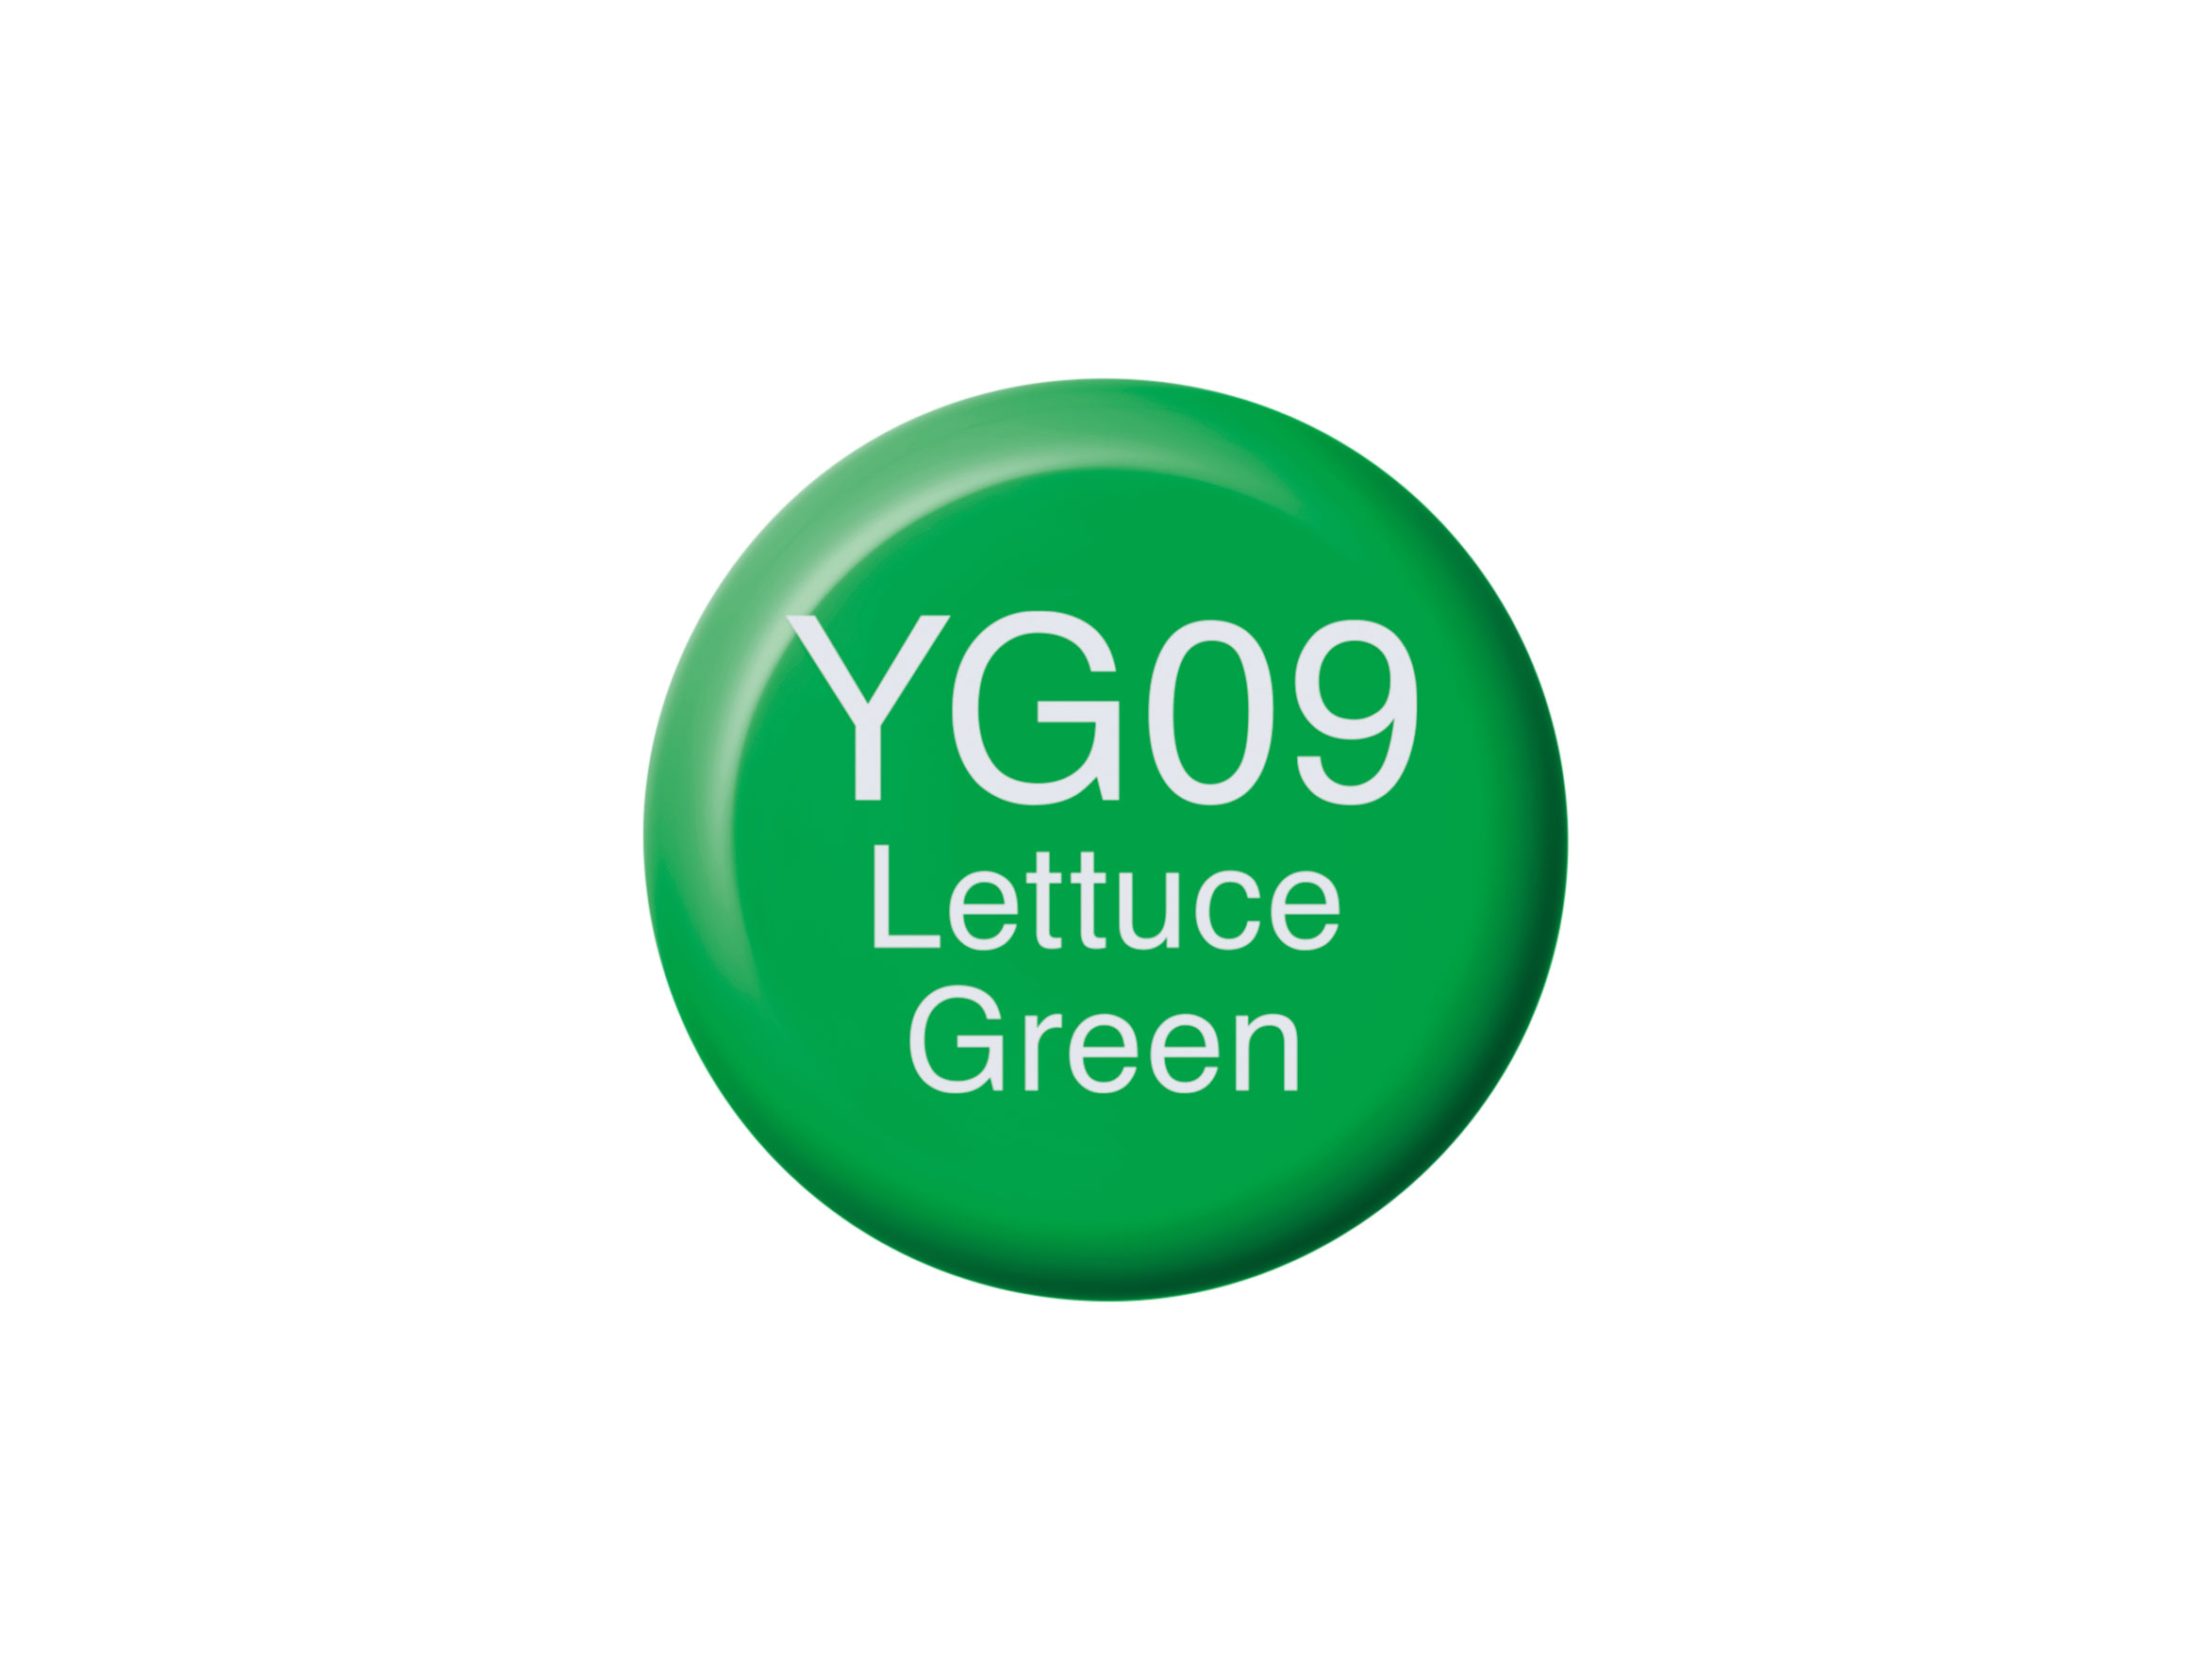 Copic Ink YG09 Lettuce Green